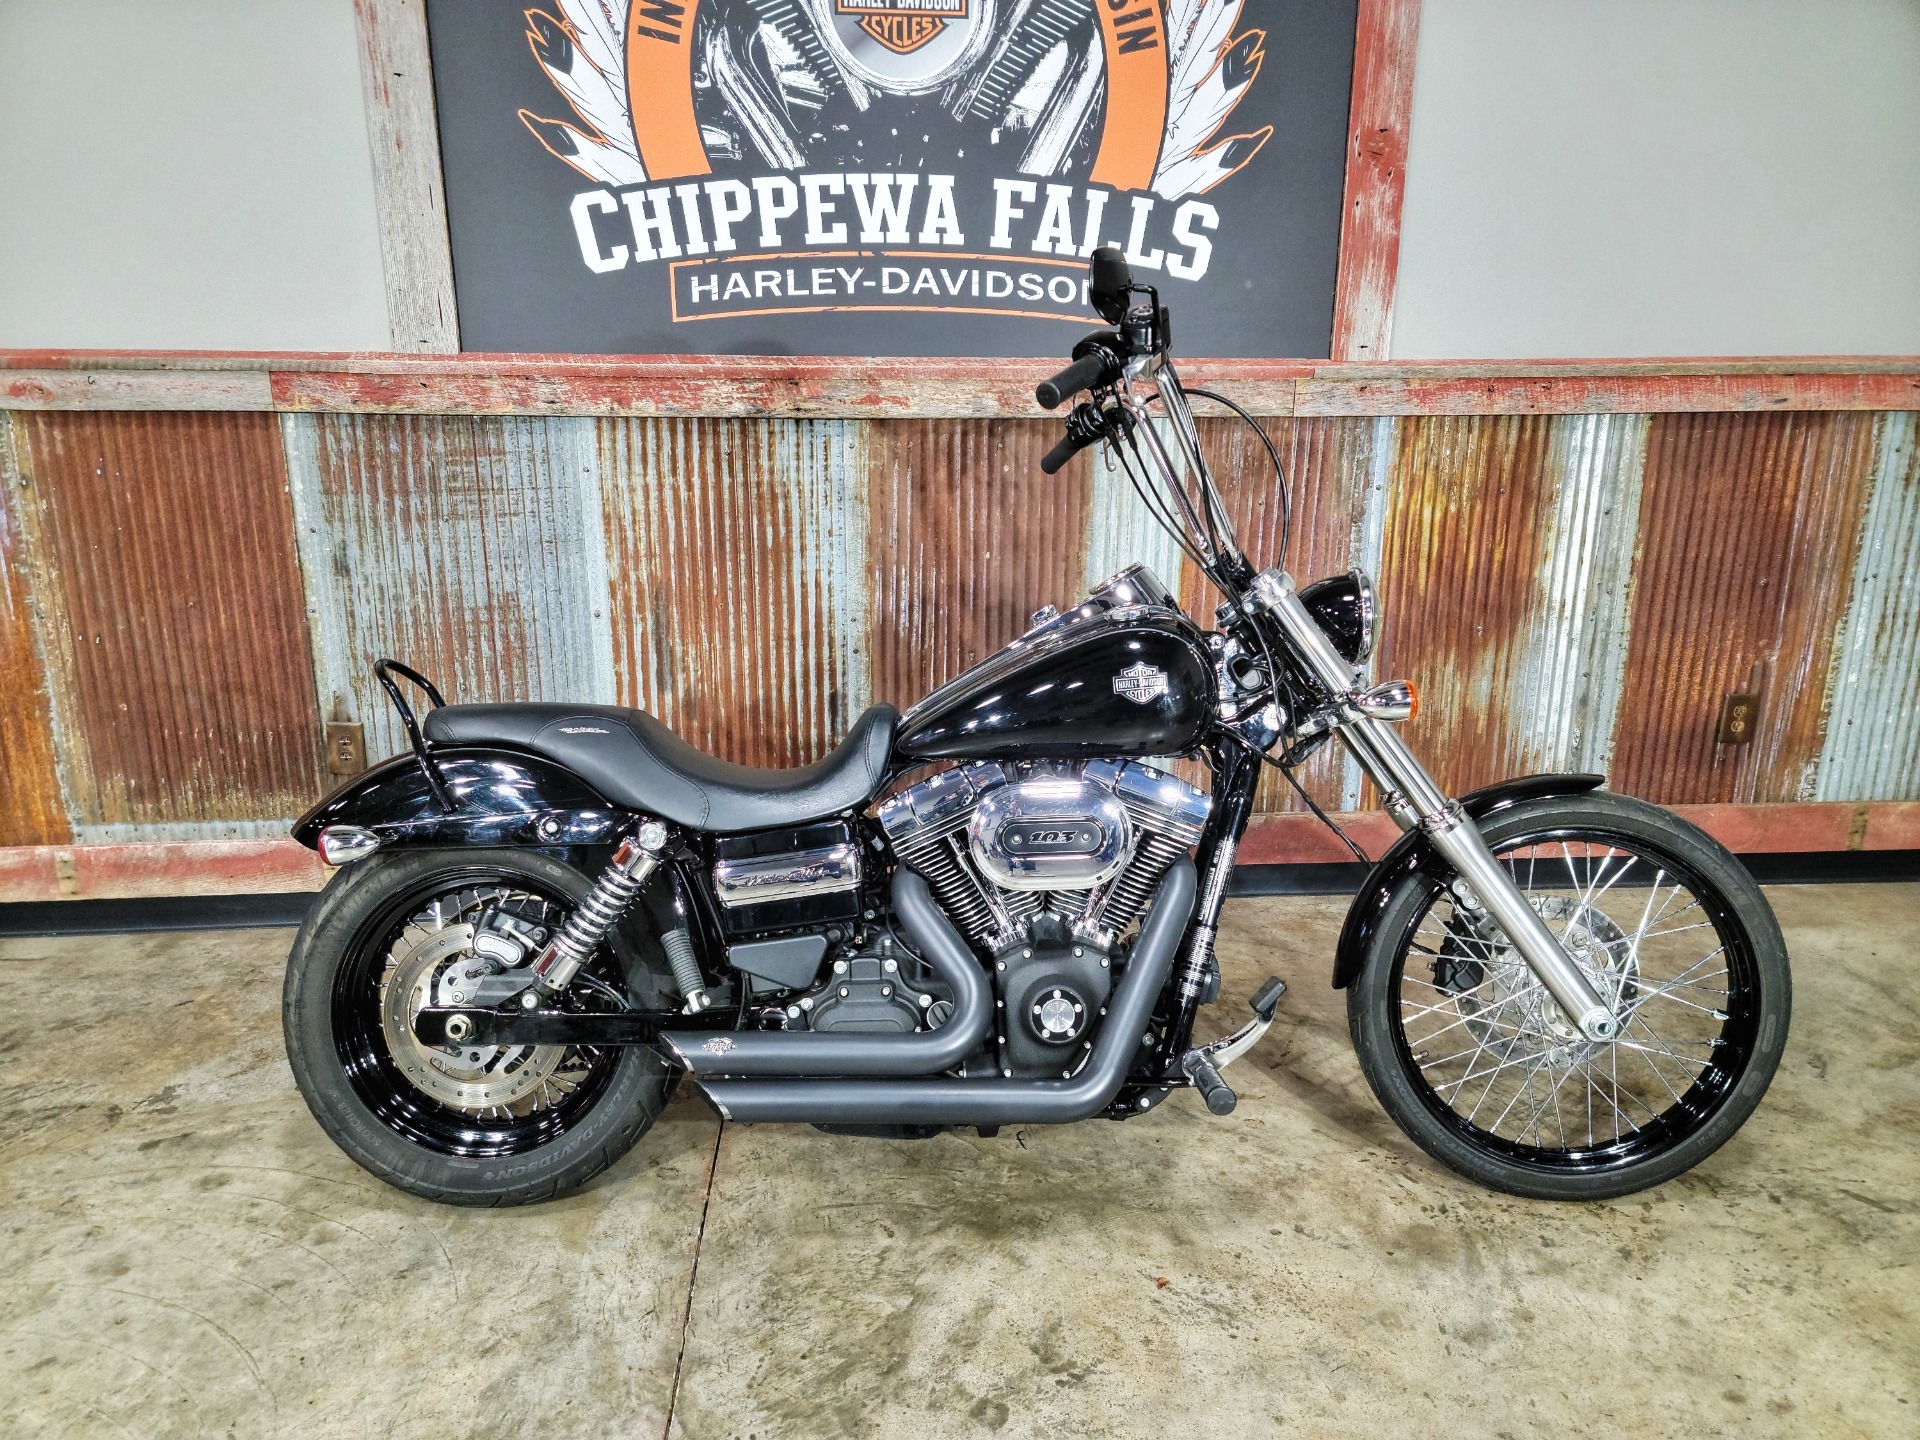 Used 2016 Harley Davidson Wide Glide Vivid Black Motorcycles In Chippewa Falls Wi B0542